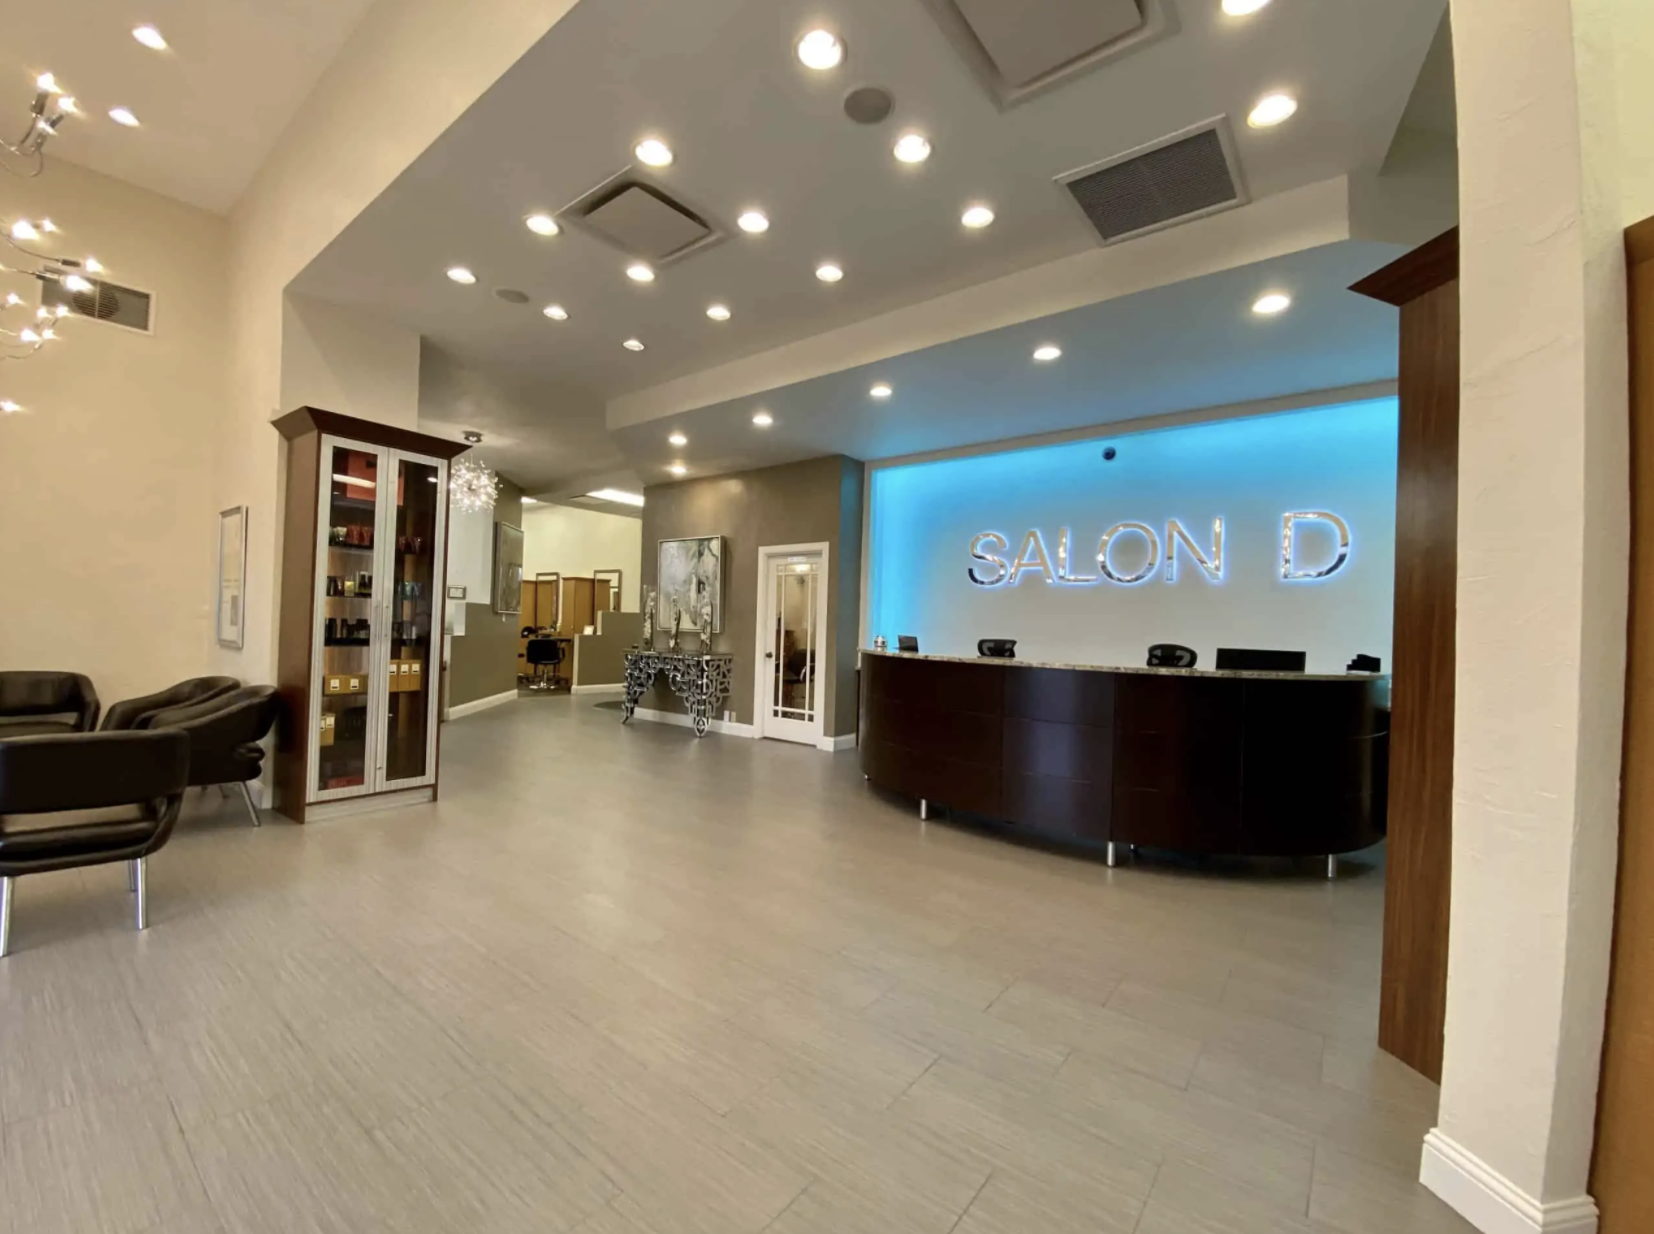 Salon D Boasts 30 Years Of Premium Service Delivery In The Entire Dallas/Fort Worth Area 